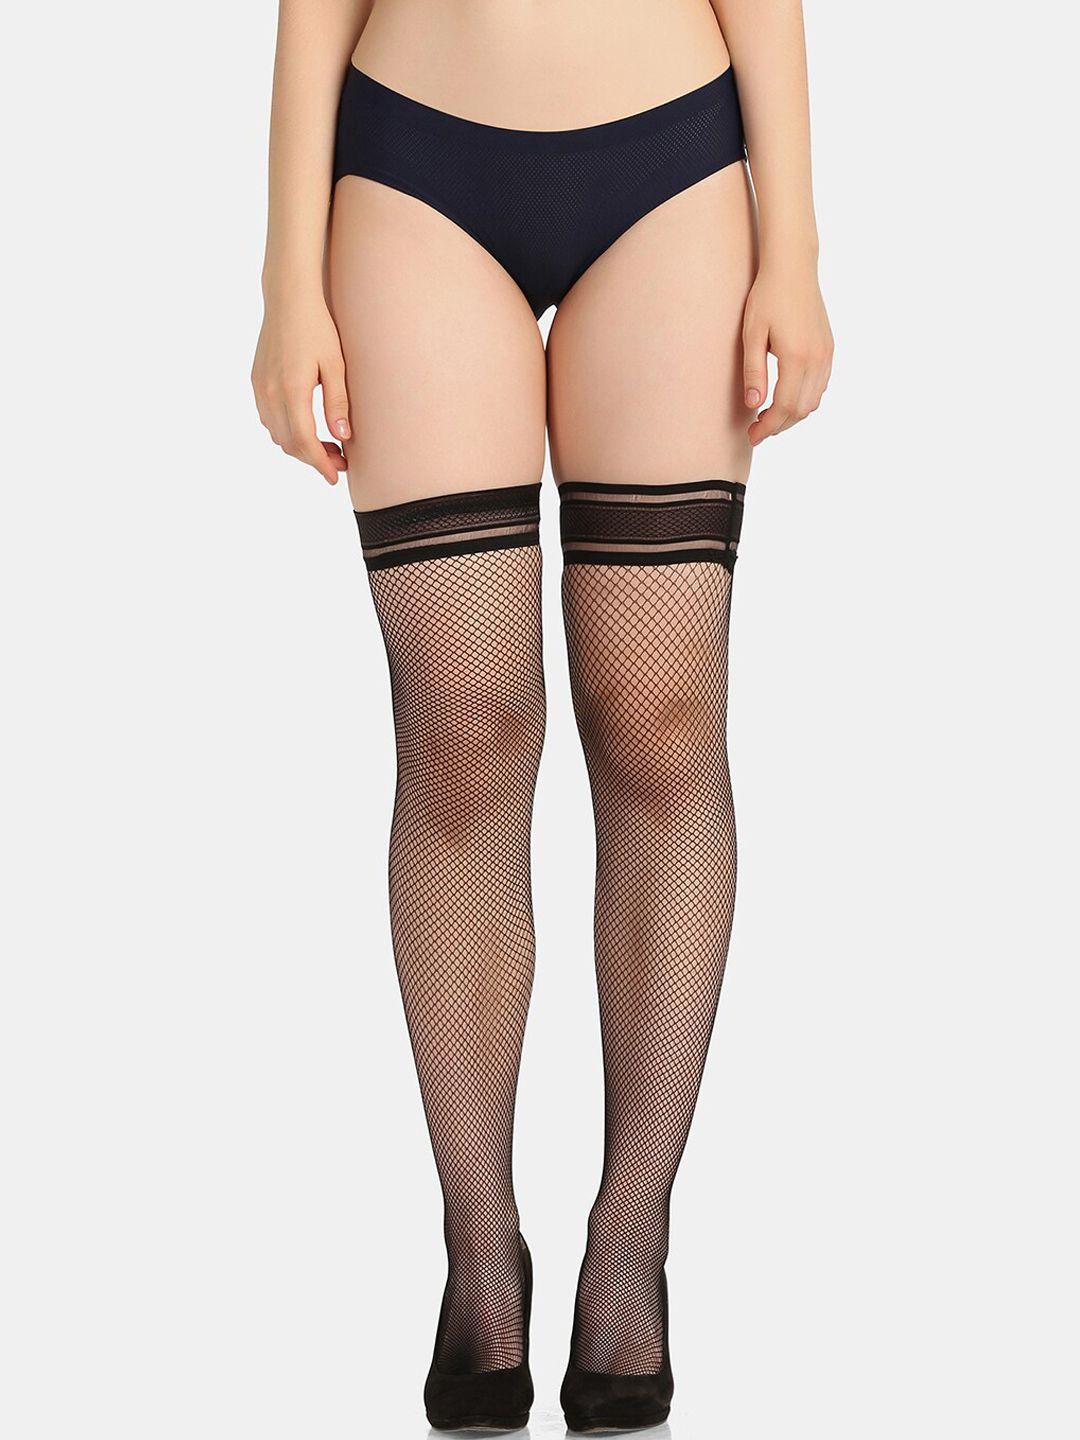 da intimo women black textured semi-sheer above knee-length stockings